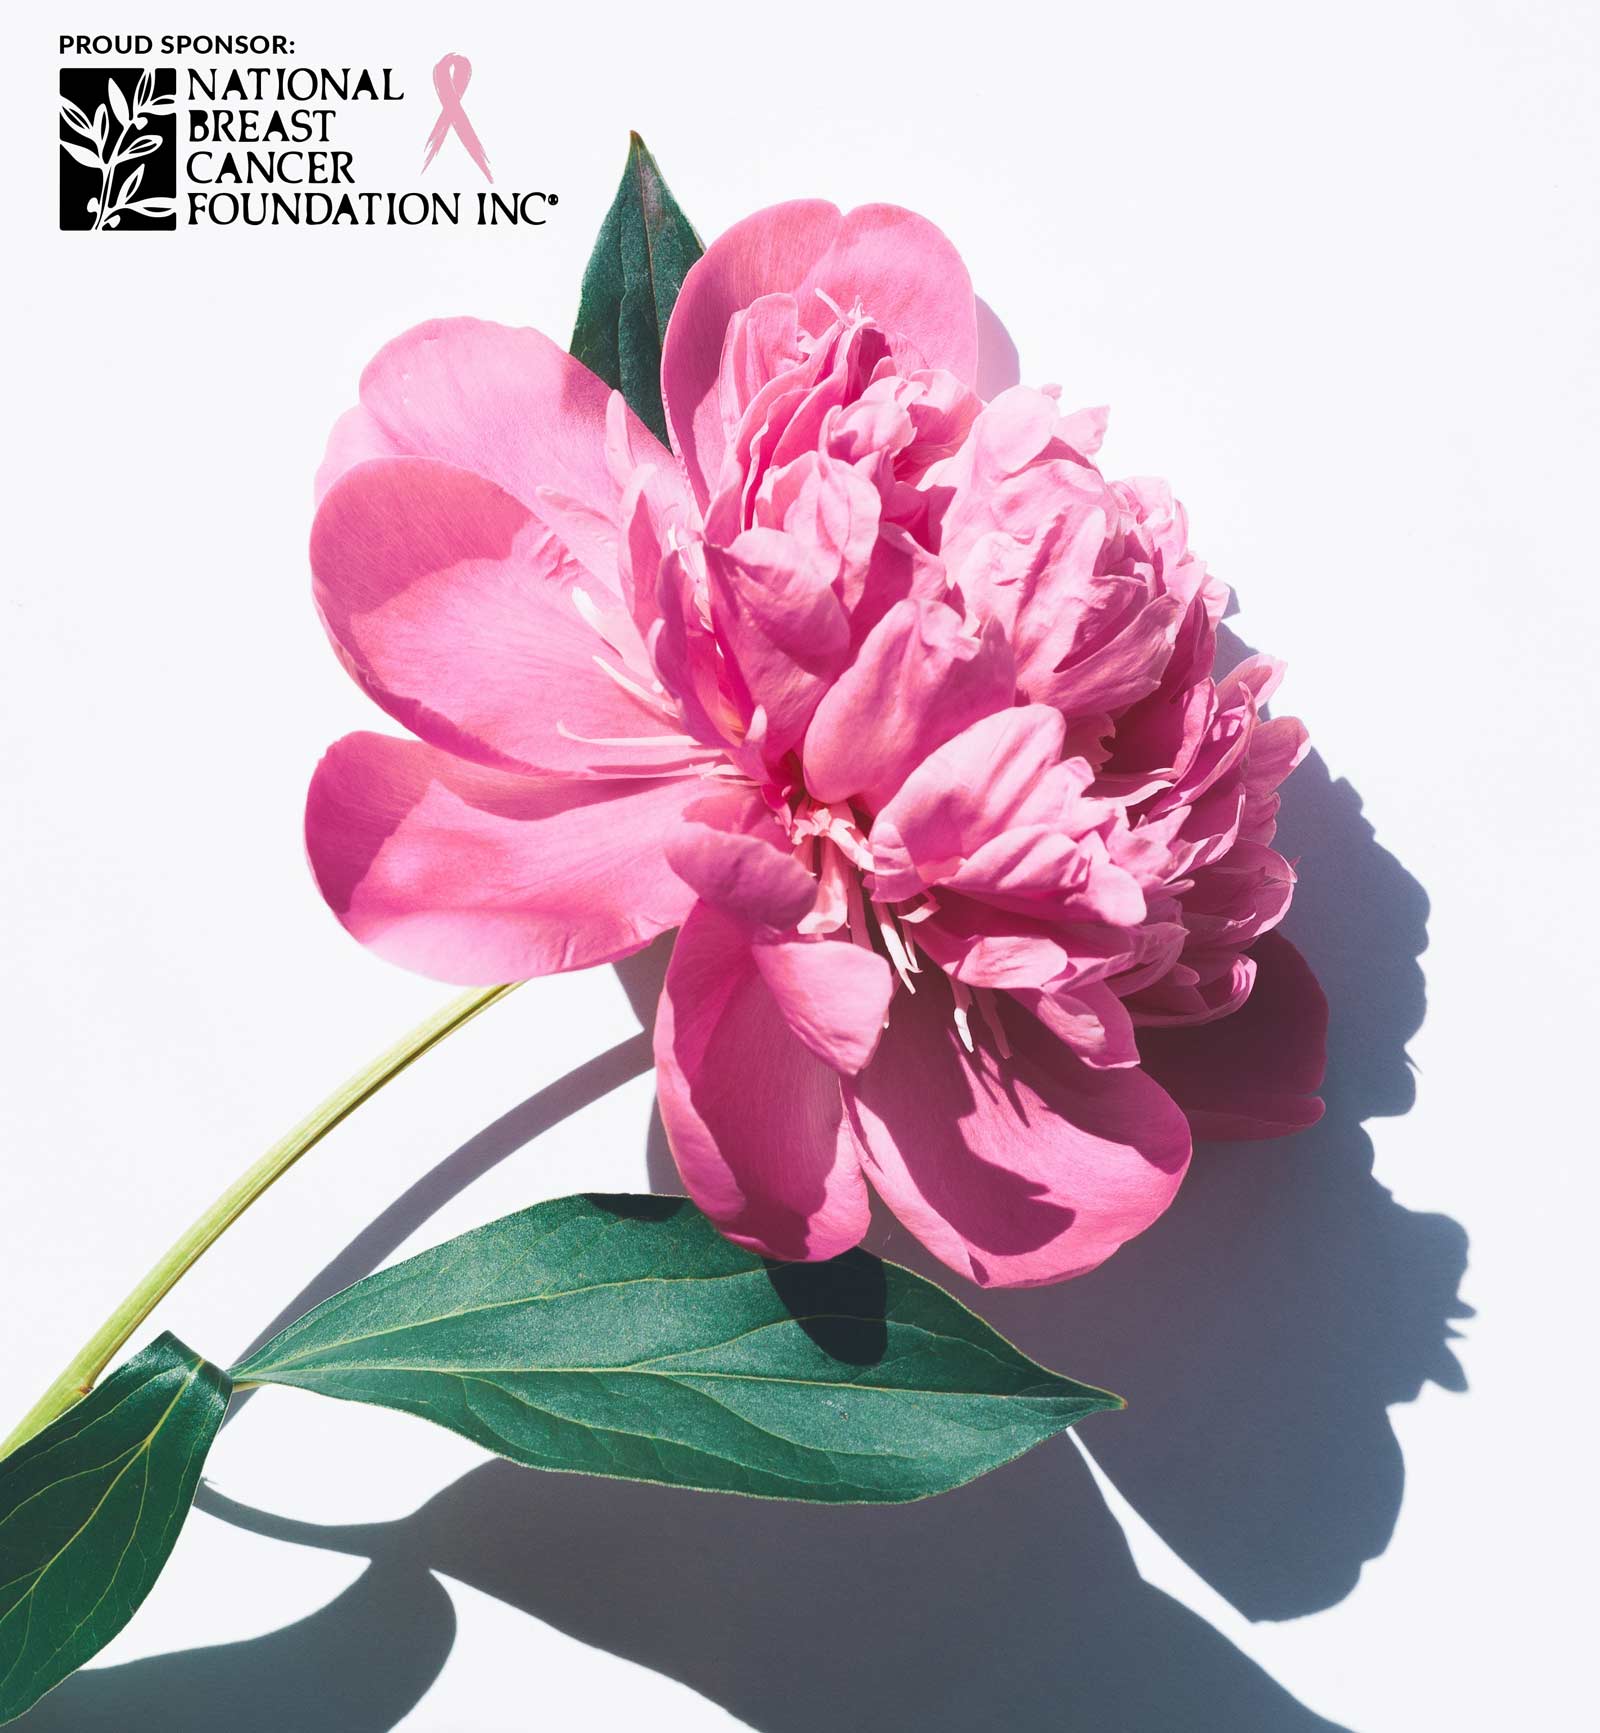 Pink breast cancer awareness flower